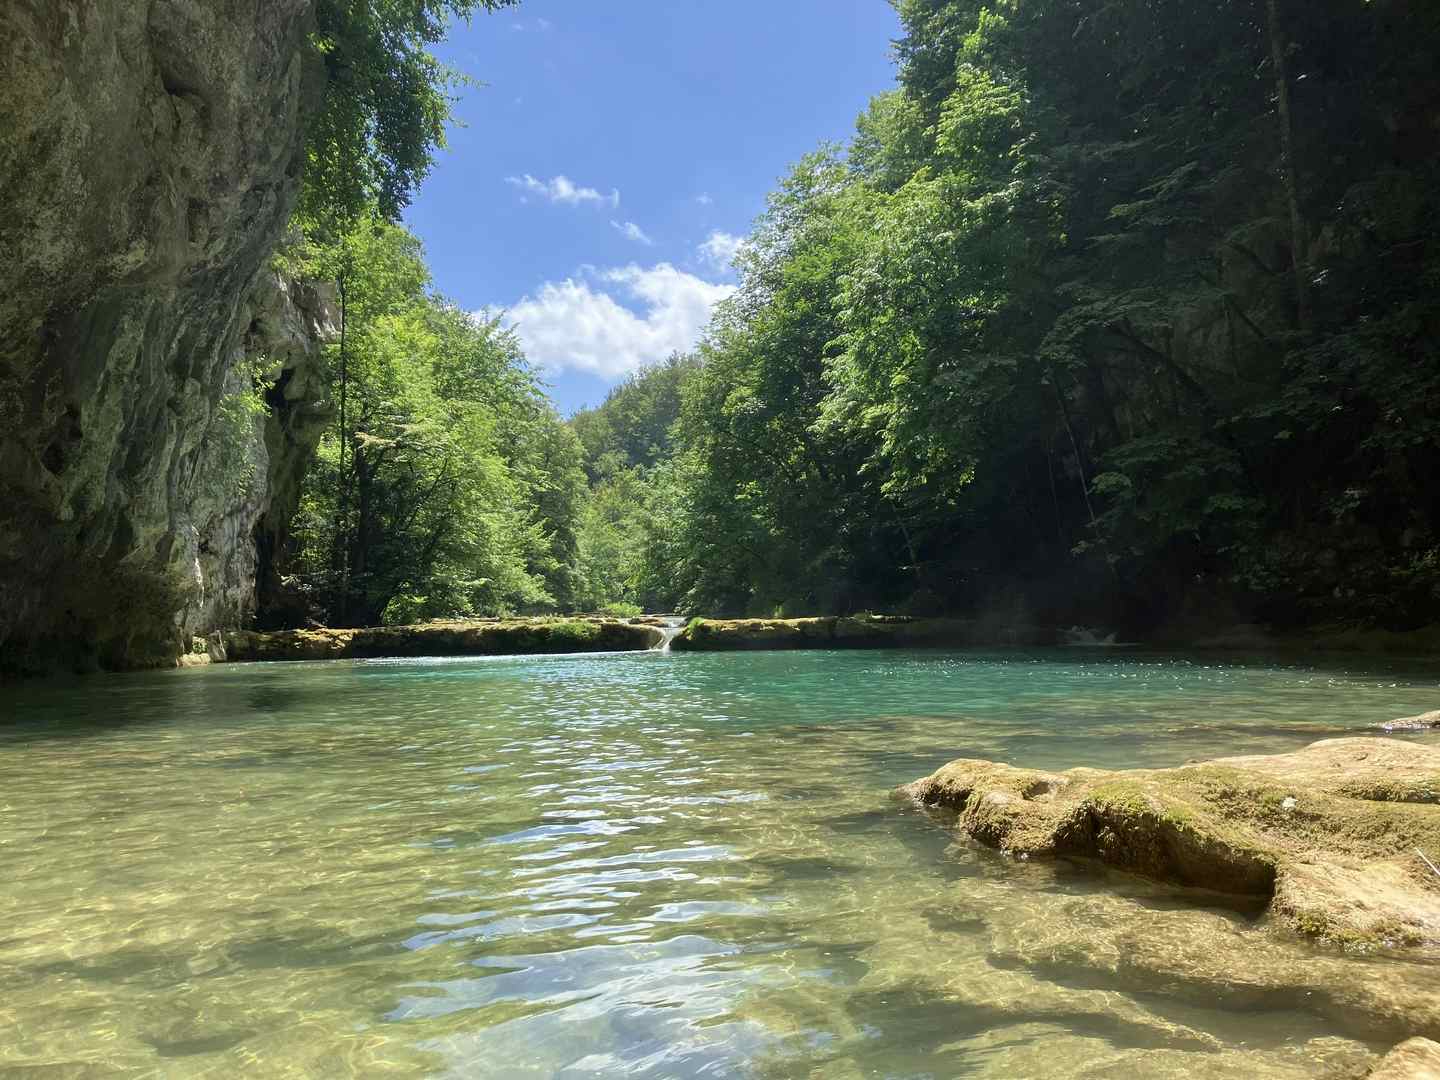 Adventure in Croatia